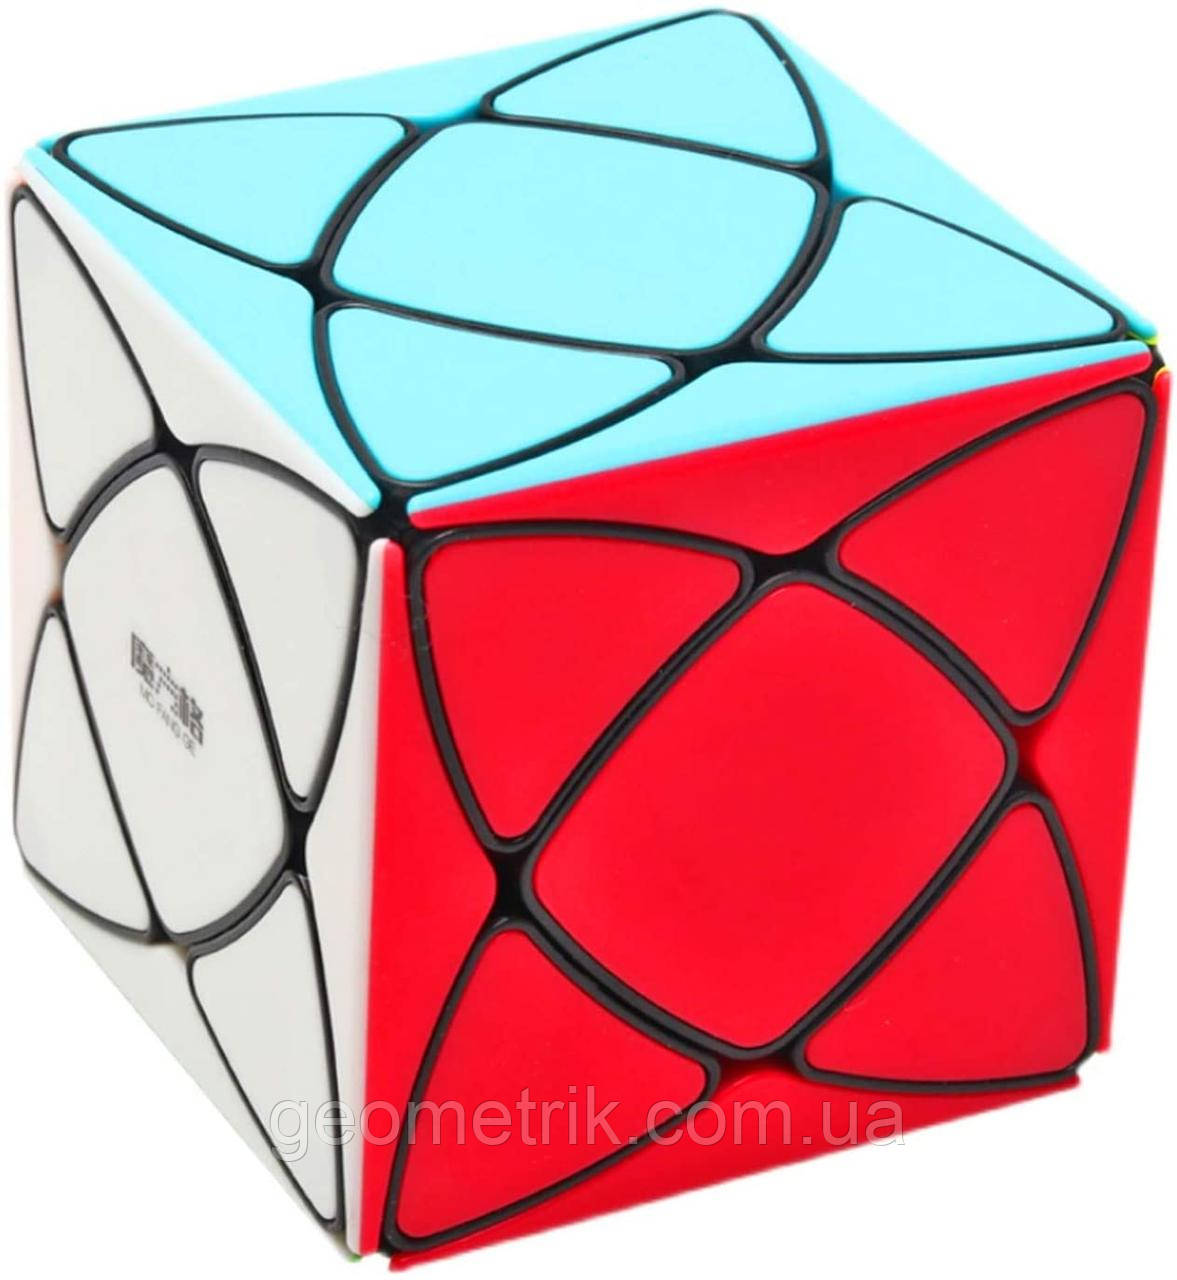 Головоломка Super Ivy Cube stickerless | Супер Іві Куб без наклейок